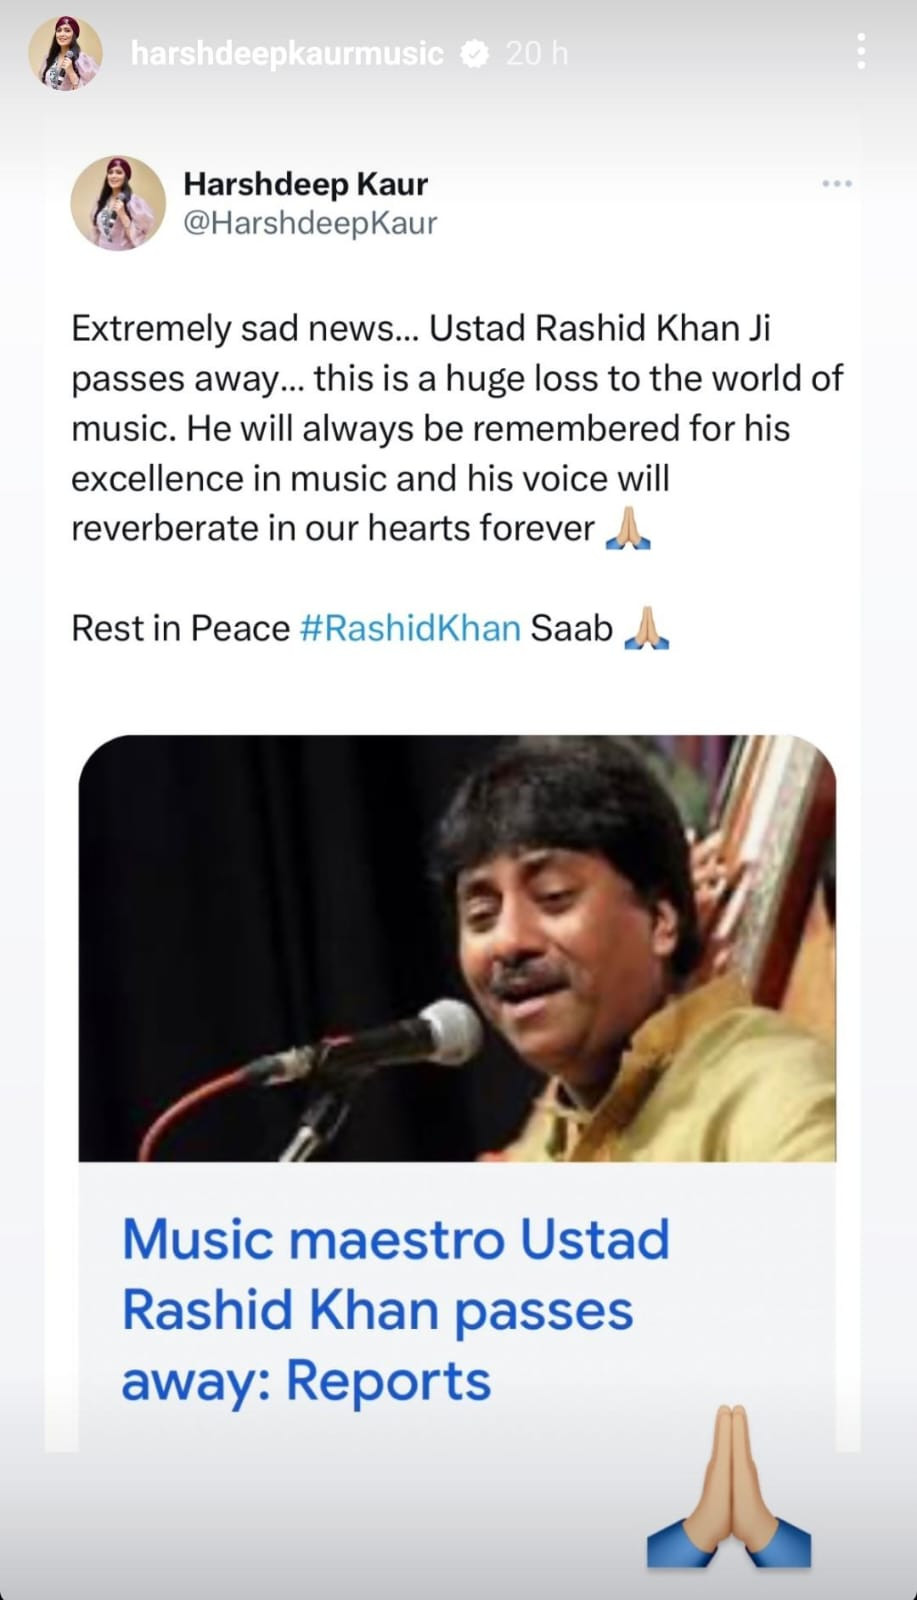 The great Ustad Rashid Khan passes away at 55